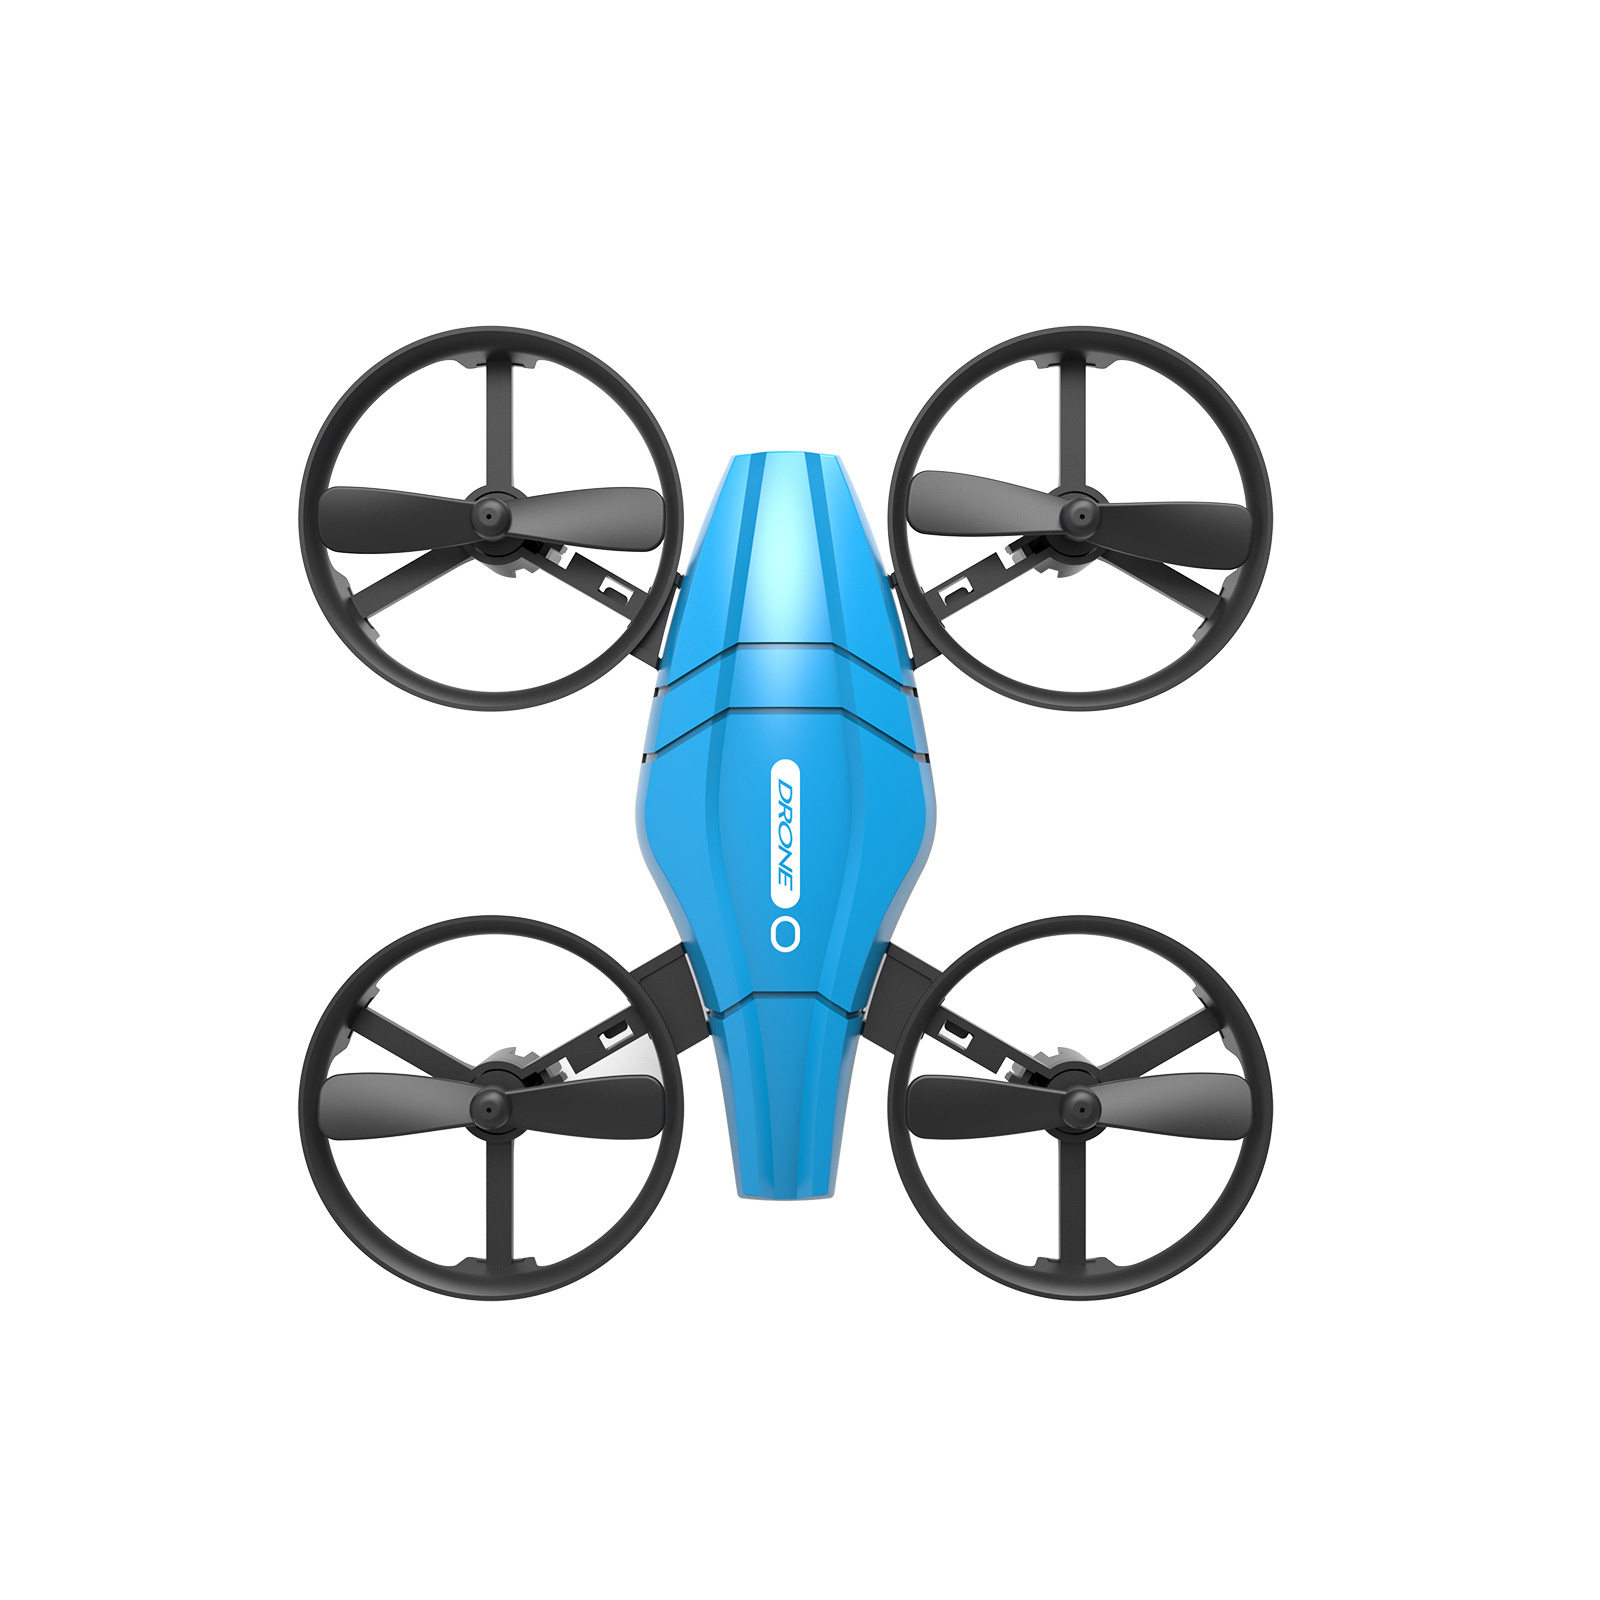 Gt1 Mini Drone 2.4g Remote Control Quadcopter 360 Degree Tumbling Aircraft Model Toys Orange 2 Batteries